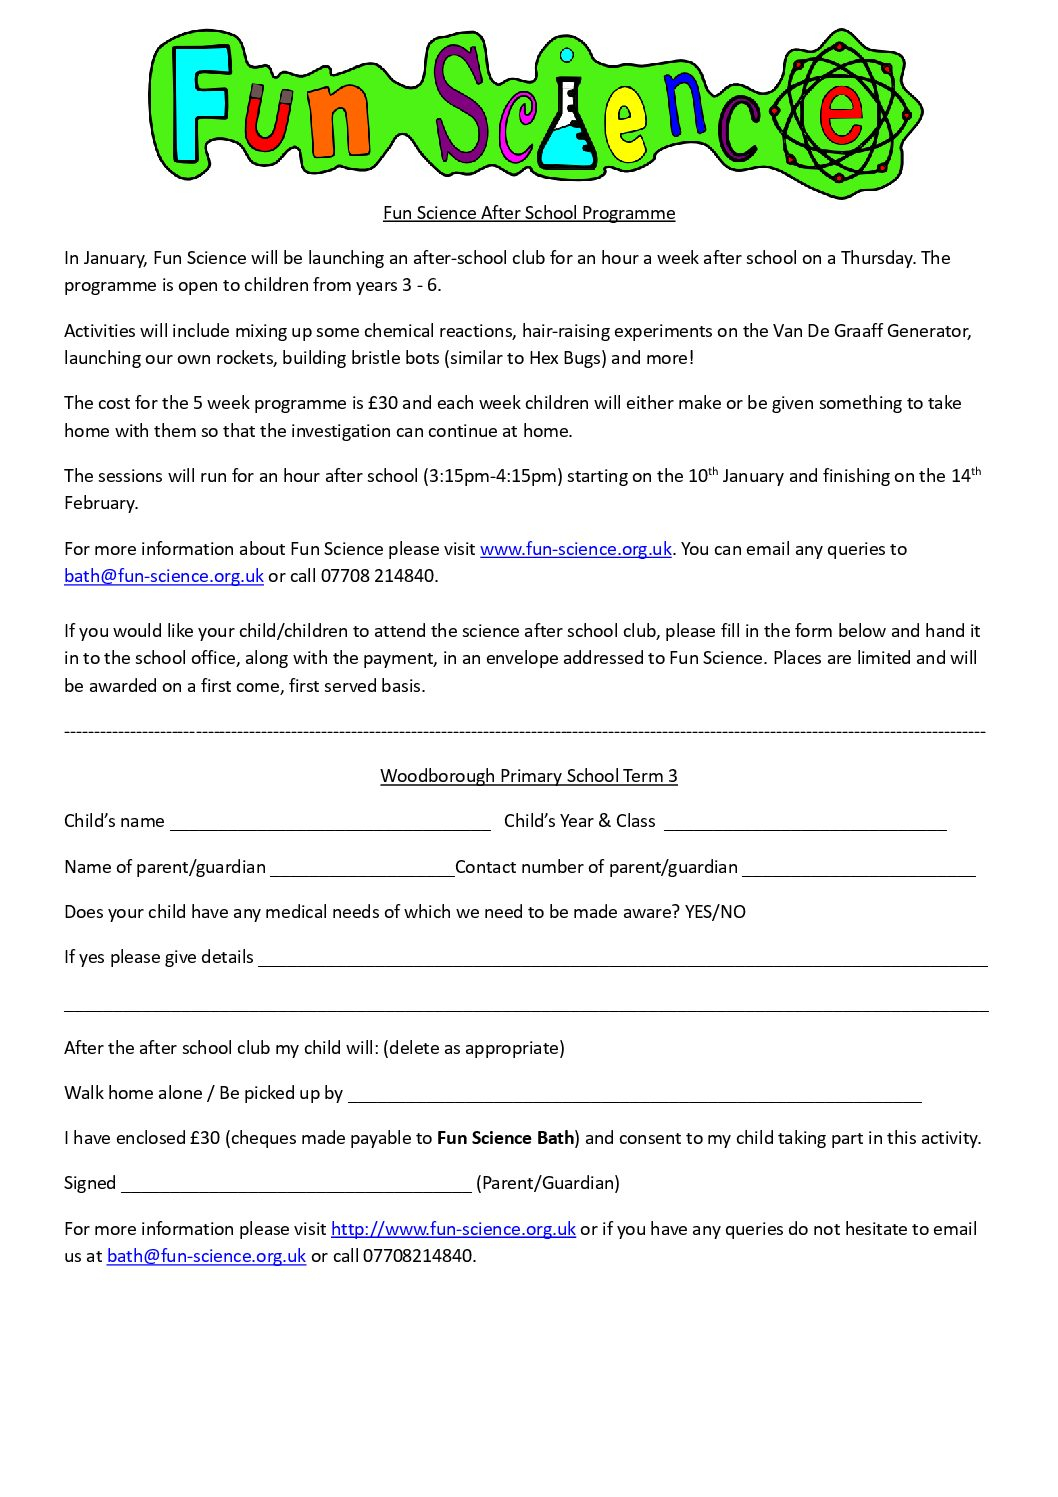 Fun Science Club Woodborough Consent Form Term 3 2018 Woodborough